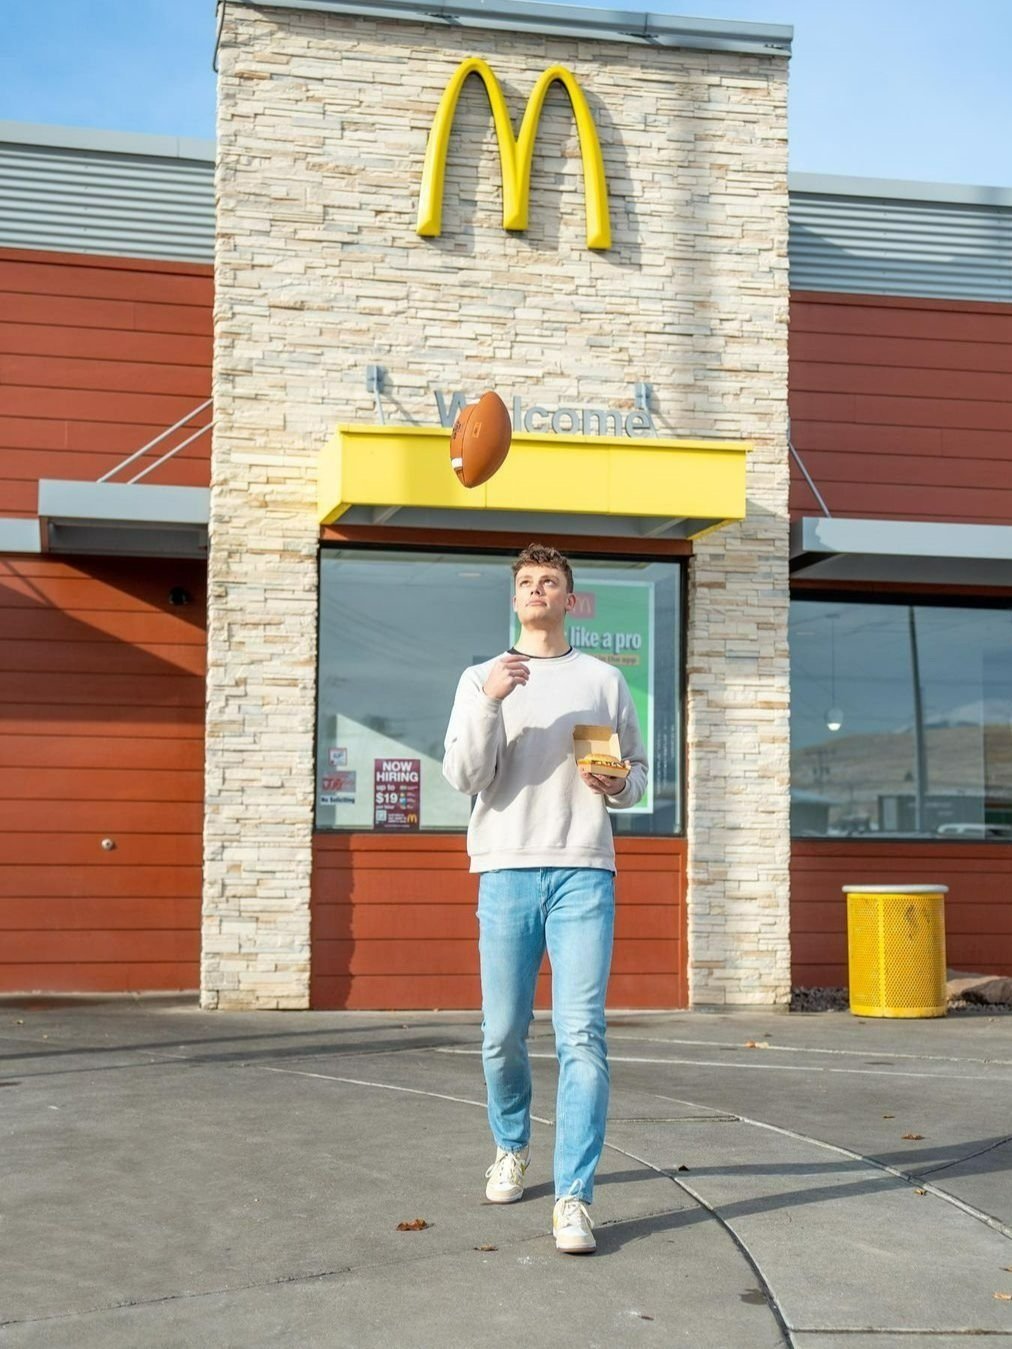 IG: Sponsored by McDonald's 